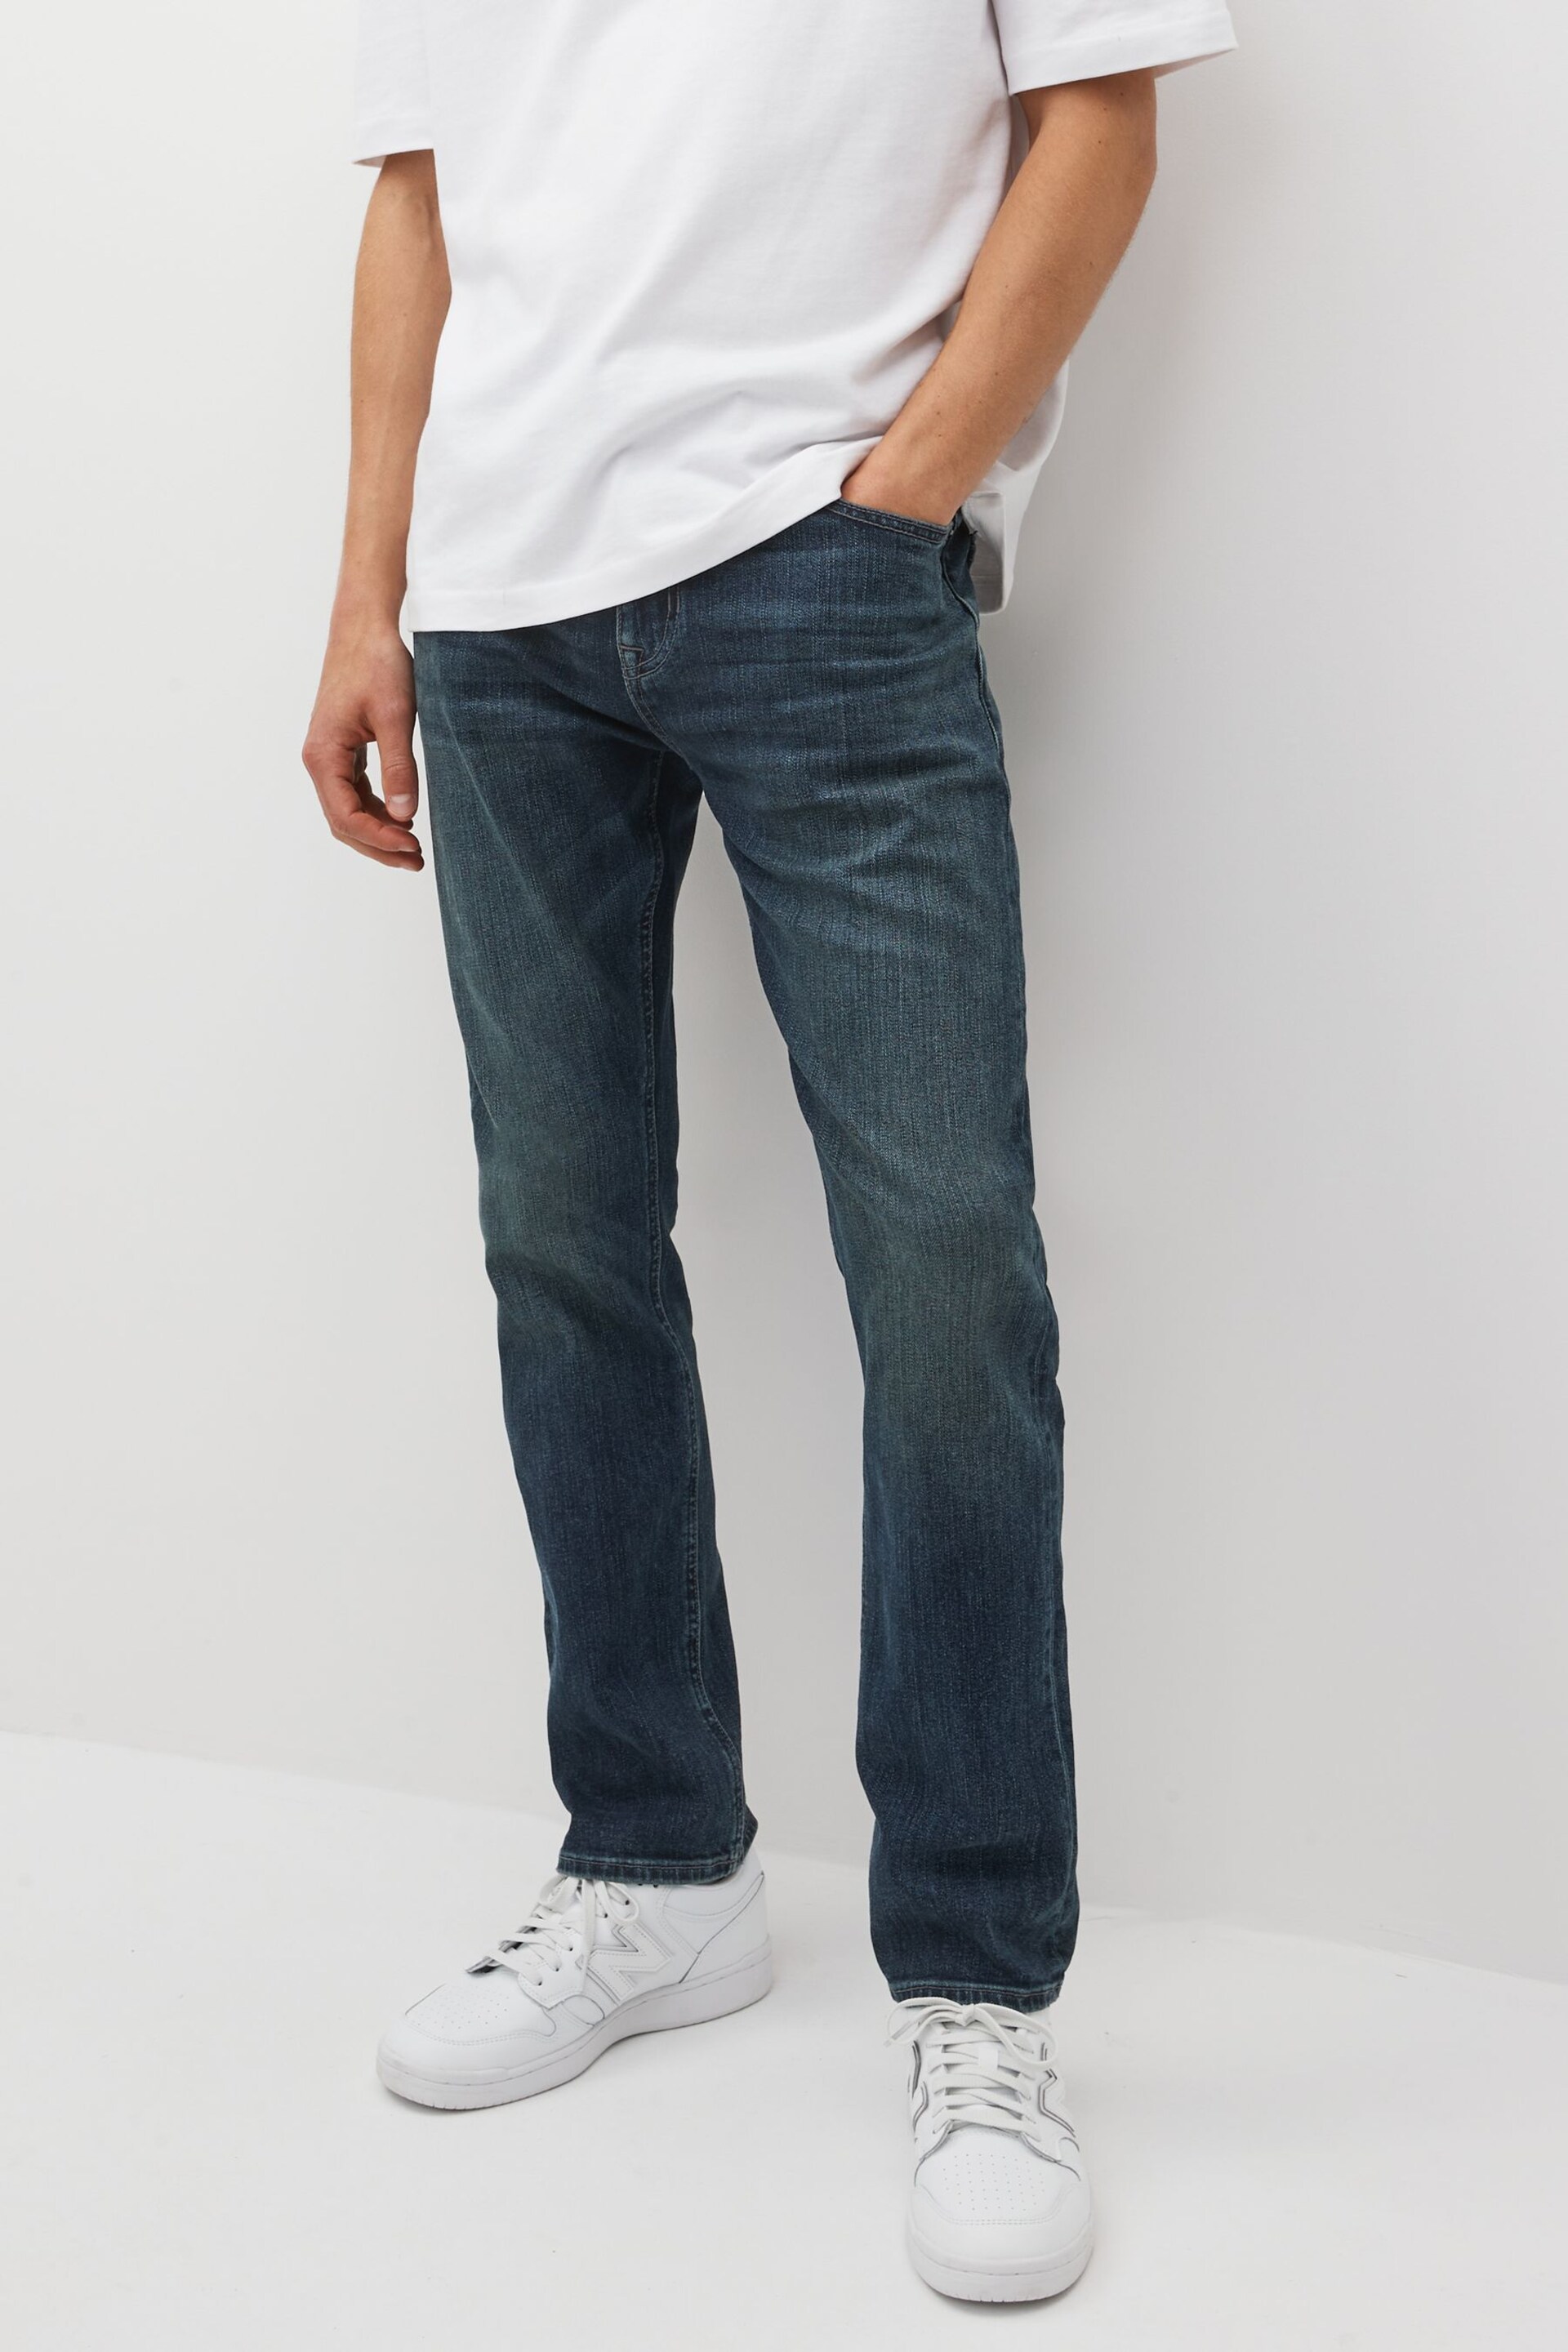 Blue Vintage Tint Slim Fit Premium Heavyweight Signature Cotton Jeans - Image 1 of 11